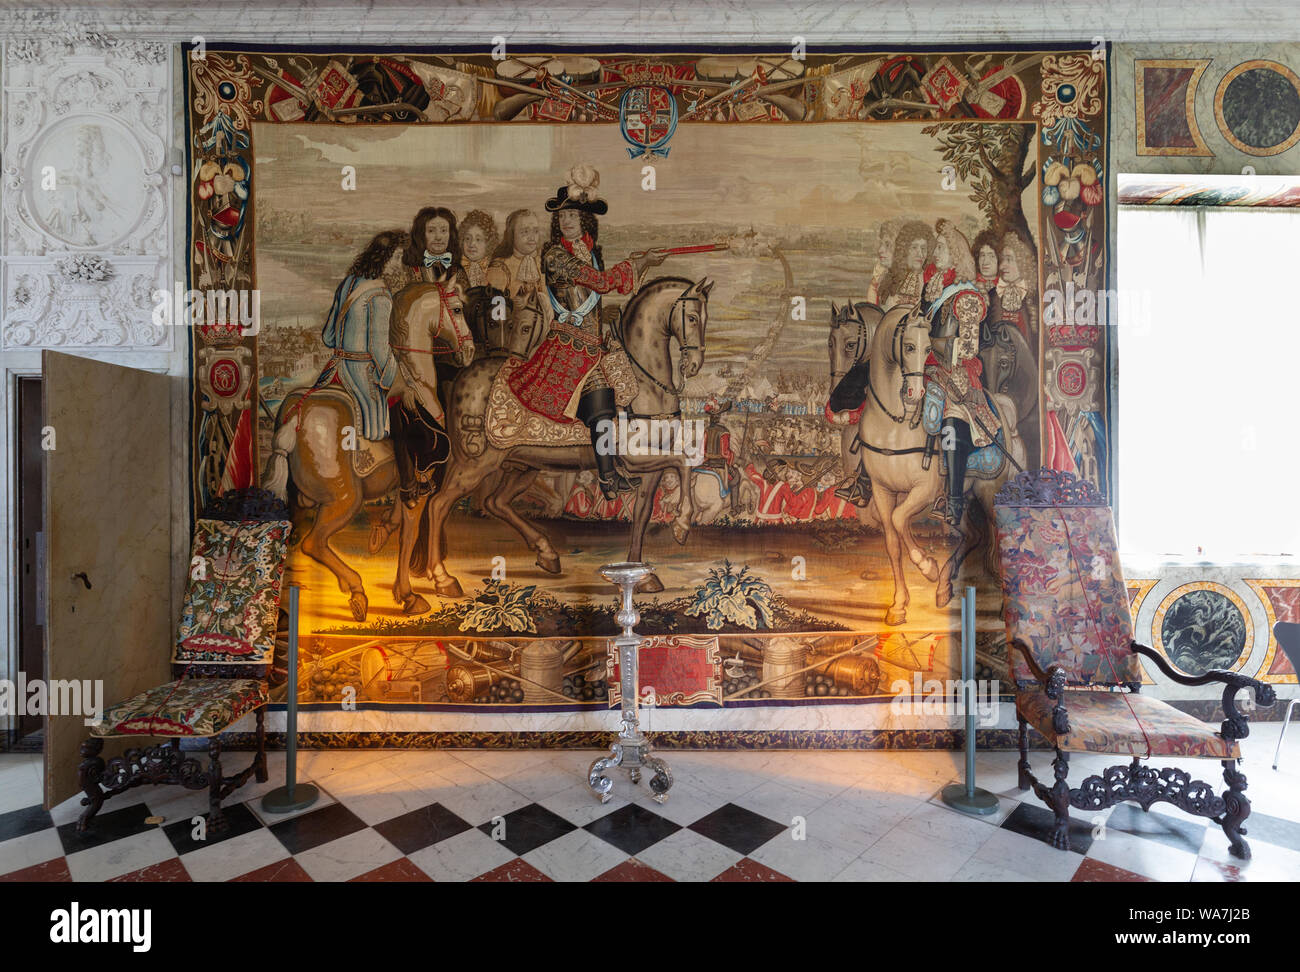 Wandteppich in der Haupthalle oder Großer Saal, Schloss Rosenborg Innenraum, Kopenhagen Dänemark Skandinavien Stockfoto